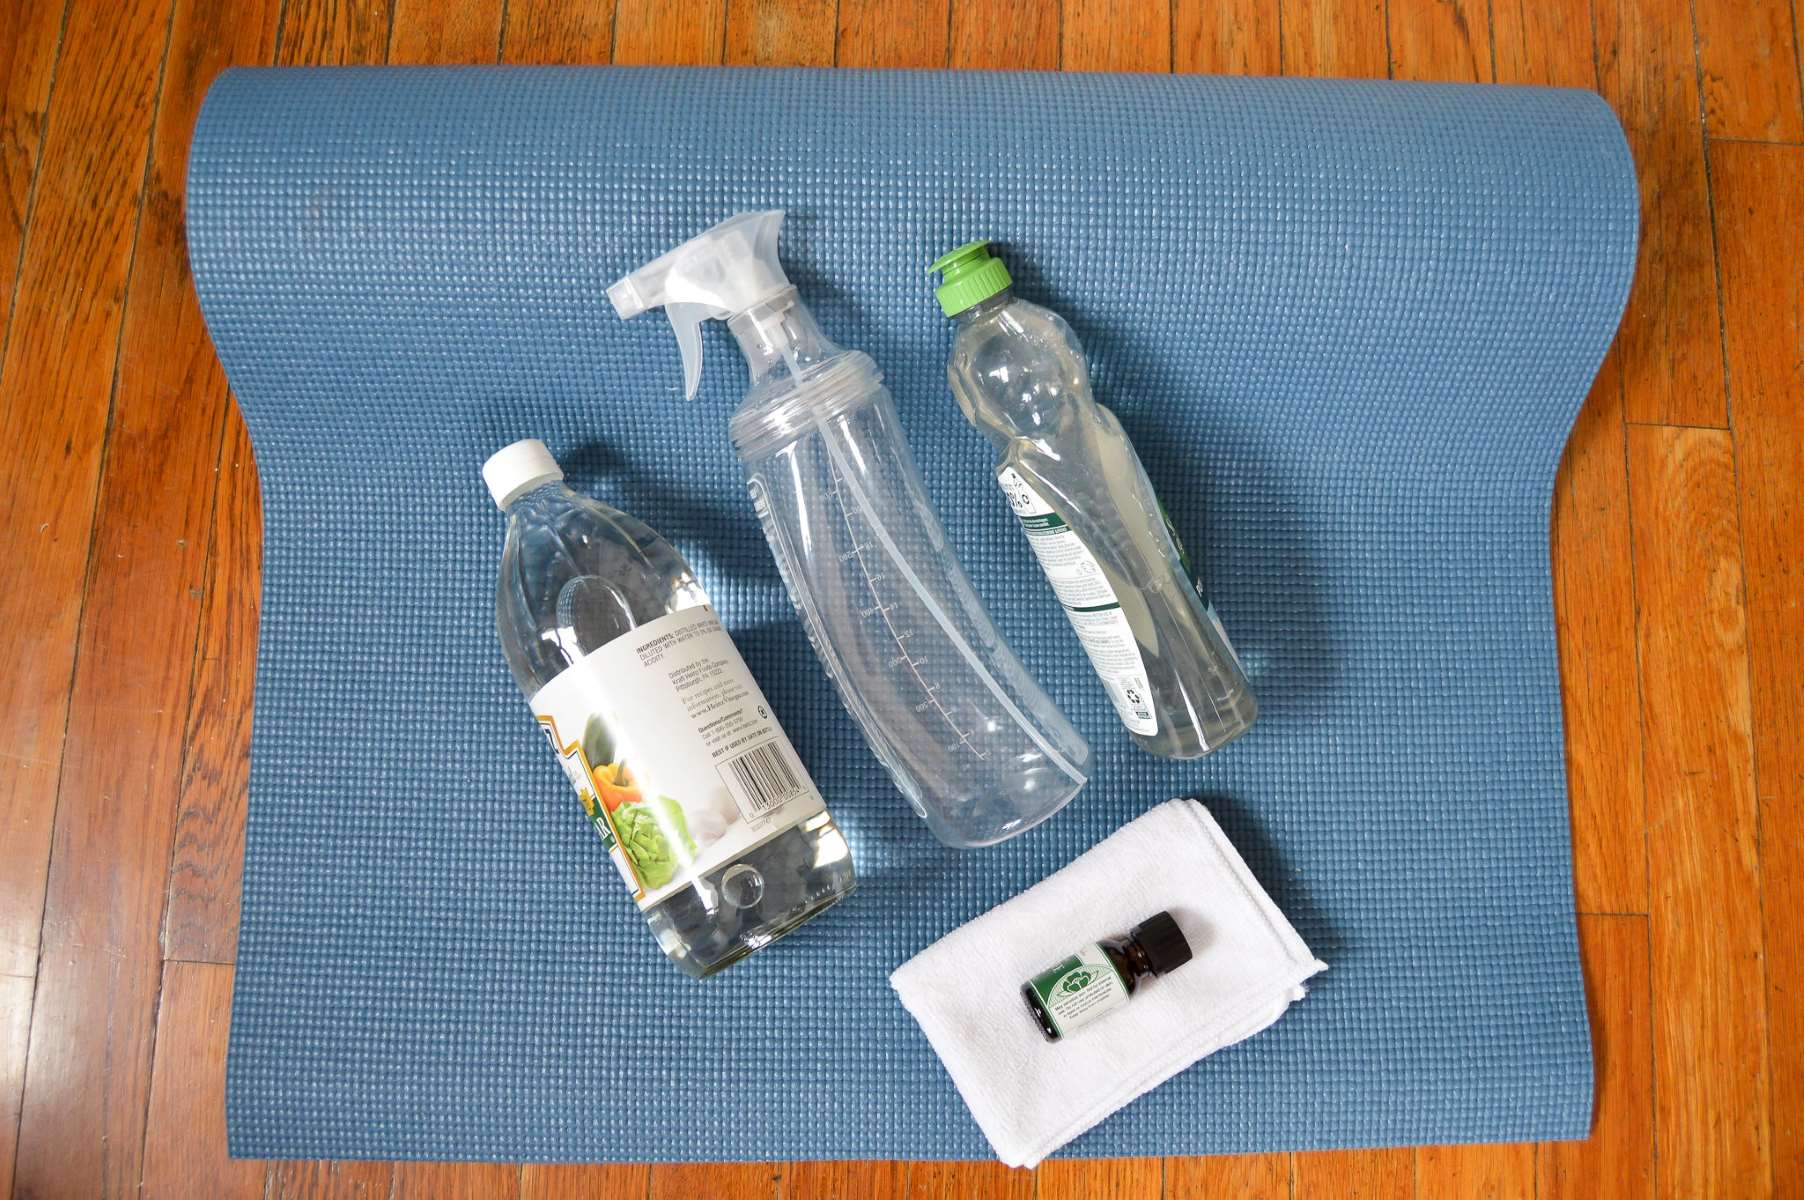 How To Make A Deodorizer For A Gym Mat With Essential Oils